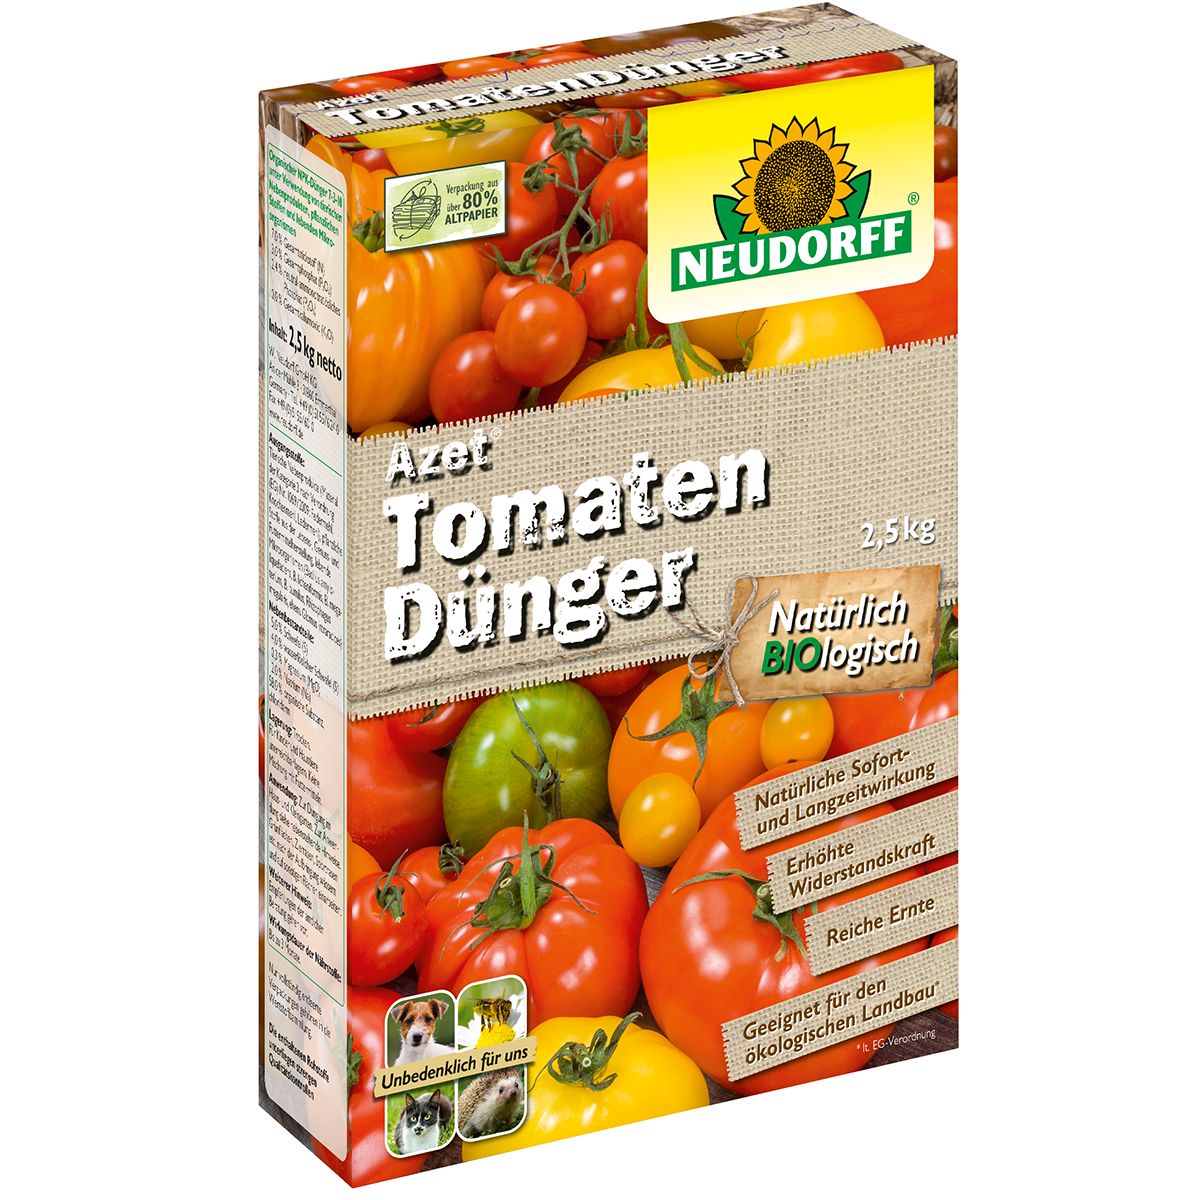 Neudorff Azet Tomatendünger, 2.5 kg